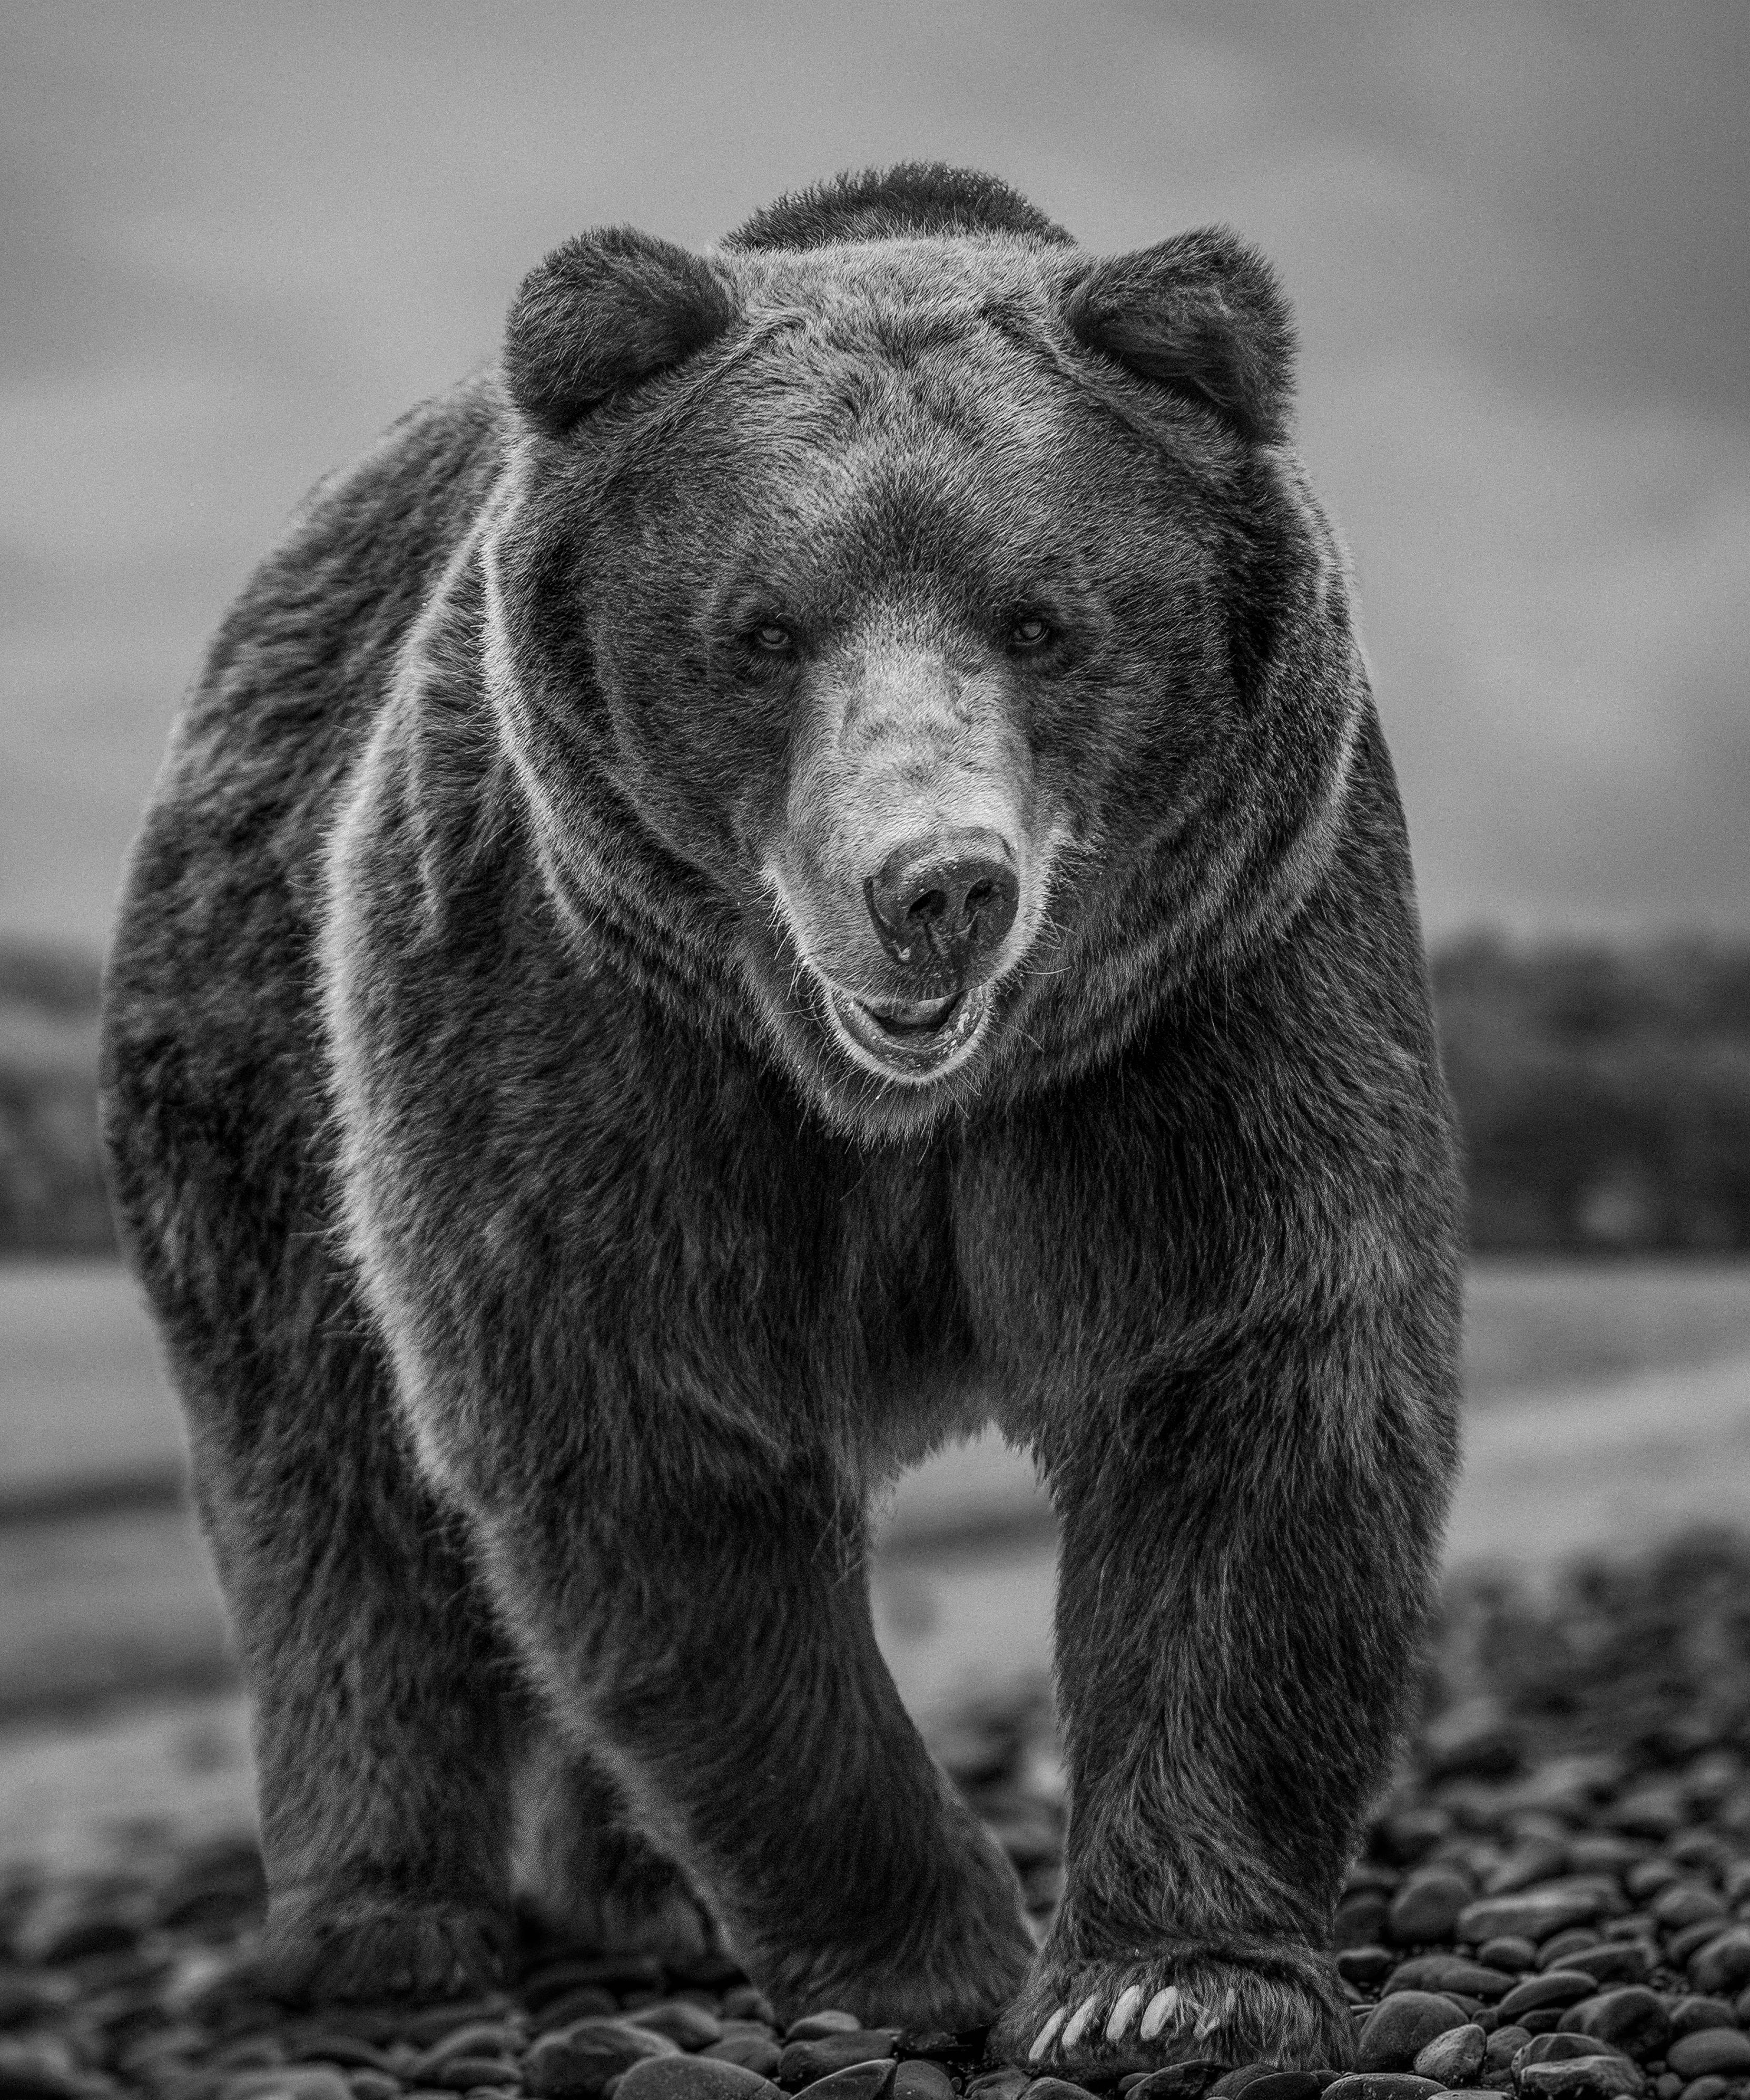 Shane Russeck Animal Print - Bear Beach 36x48  Black & White Photography, Grizzly Bear Wildlife Photograph